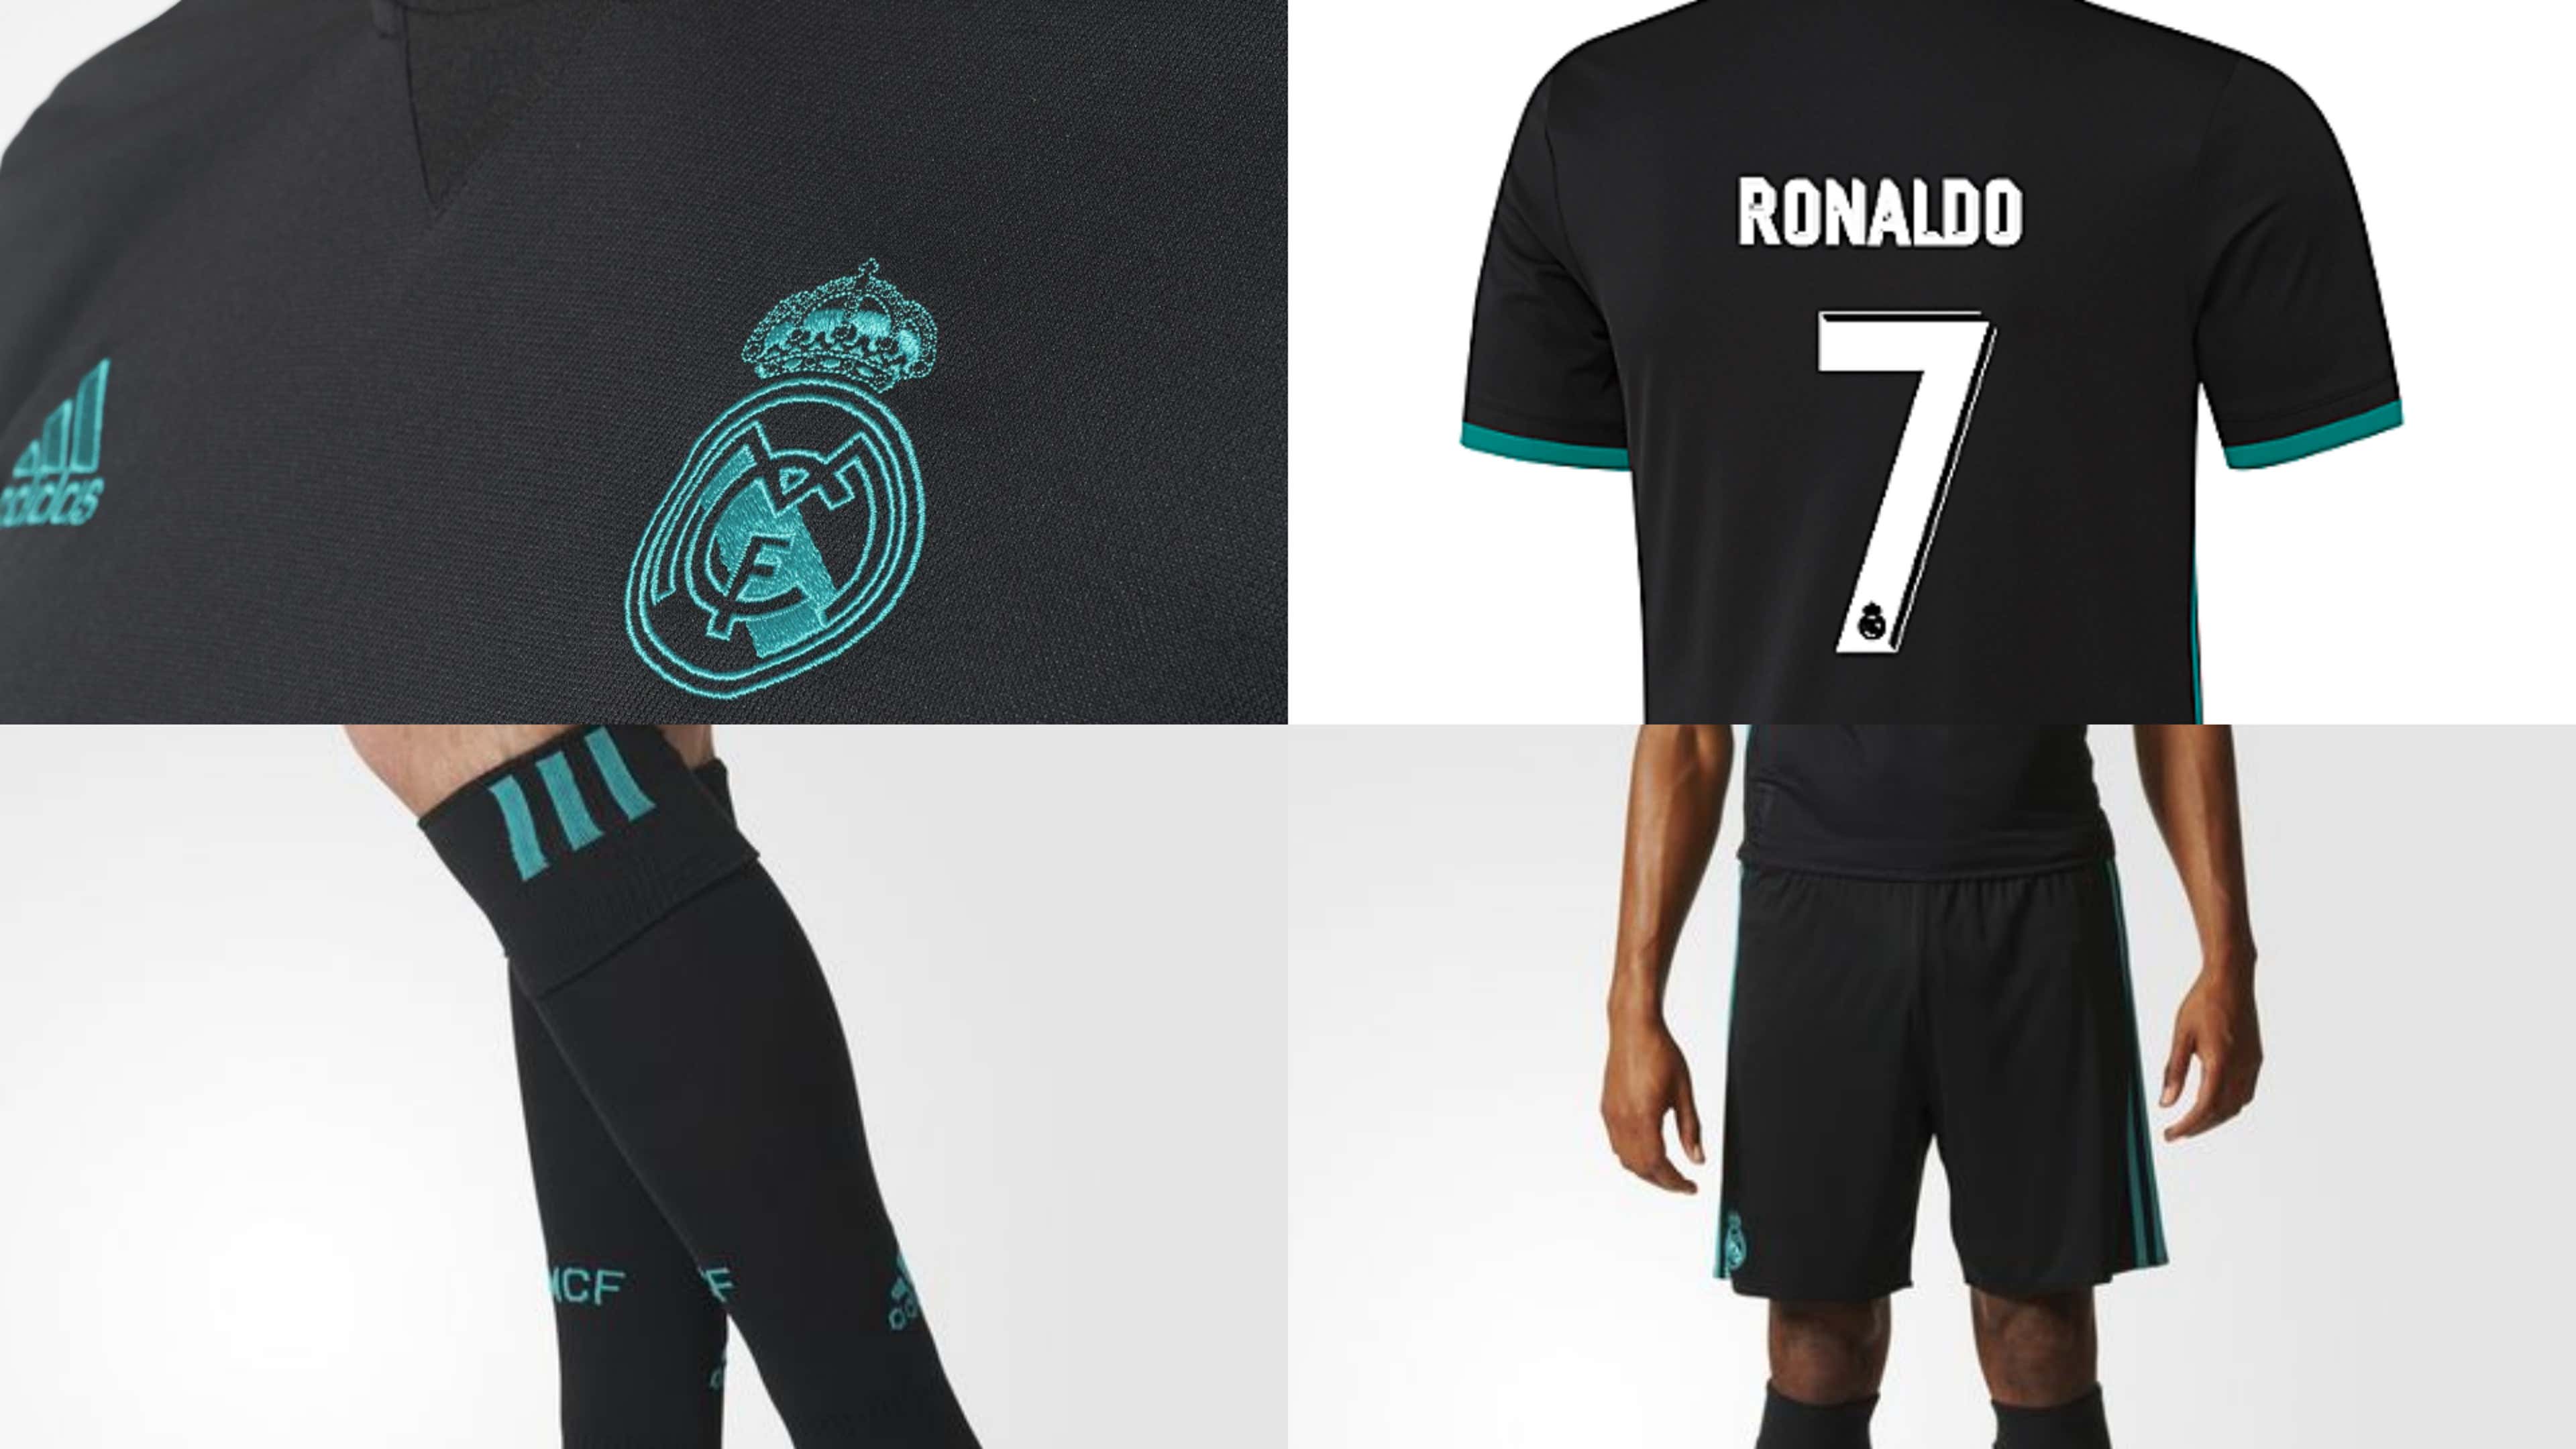 Real Madrid 17/18 C.Ronaldo 7  Ronaldo real madrid, Plantillas de camiseta,  Camisetas de equipo